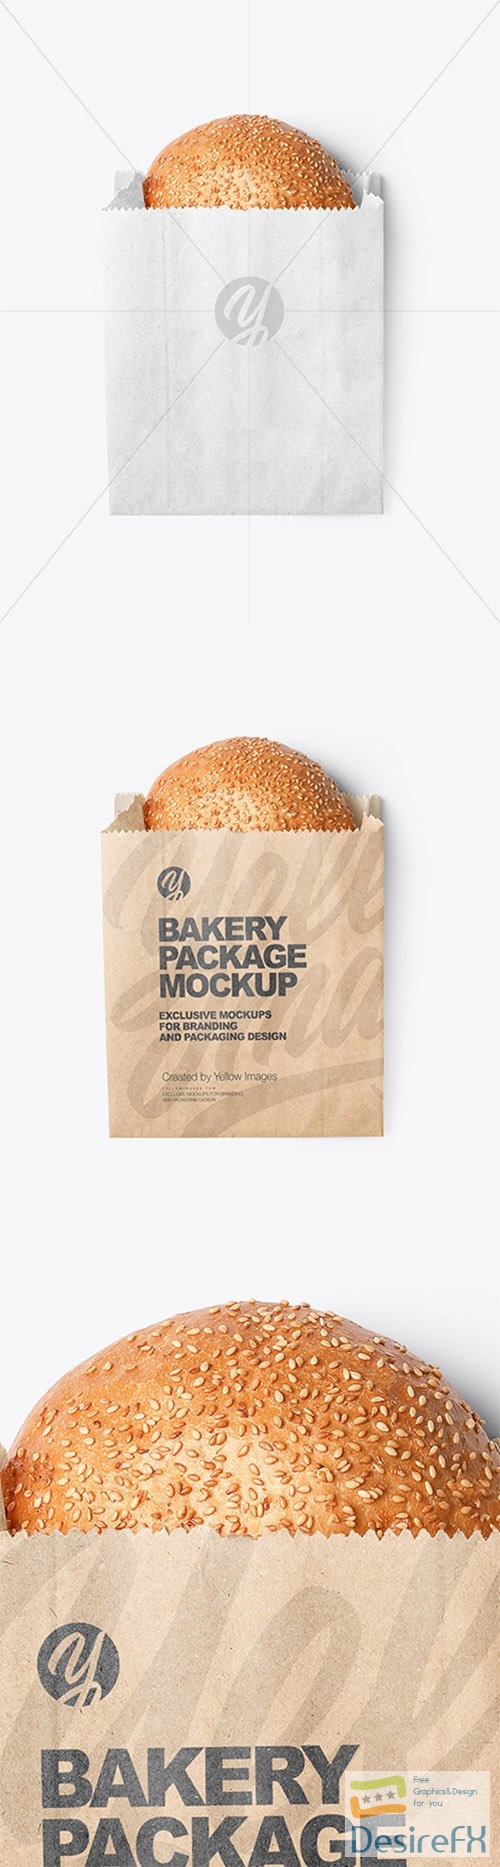 Kraft Paper Bag with Burger Bun Mockup 83429 TIF